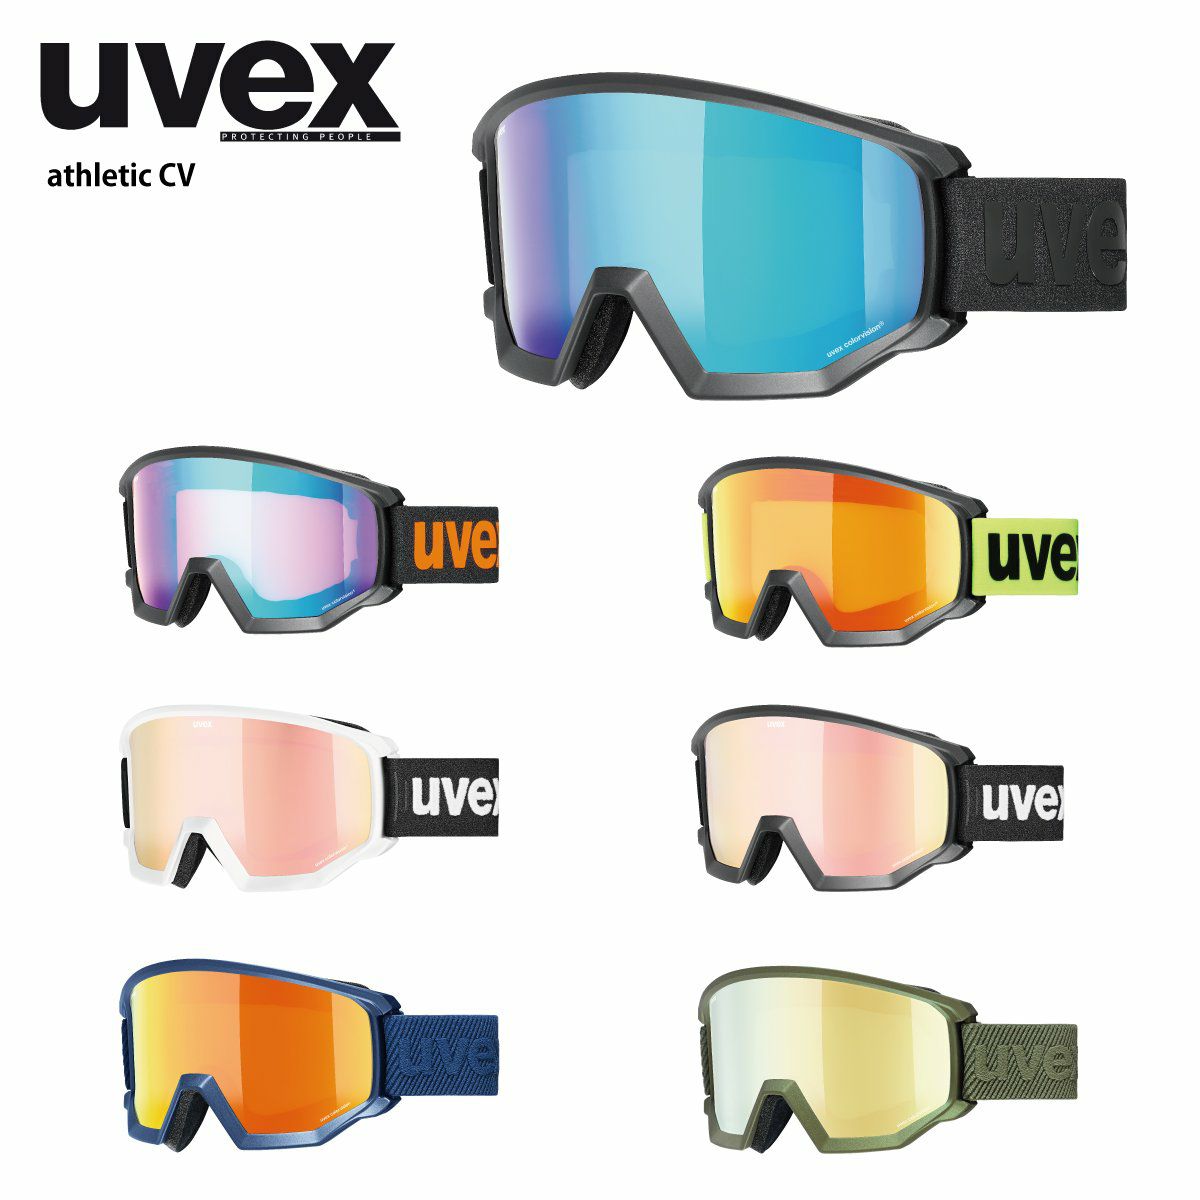 uvex(ウベックス) スキースノーボードゴーグル ユニセックス ハイコントラストミラー シングルレンズ contest CV ブラックマッ